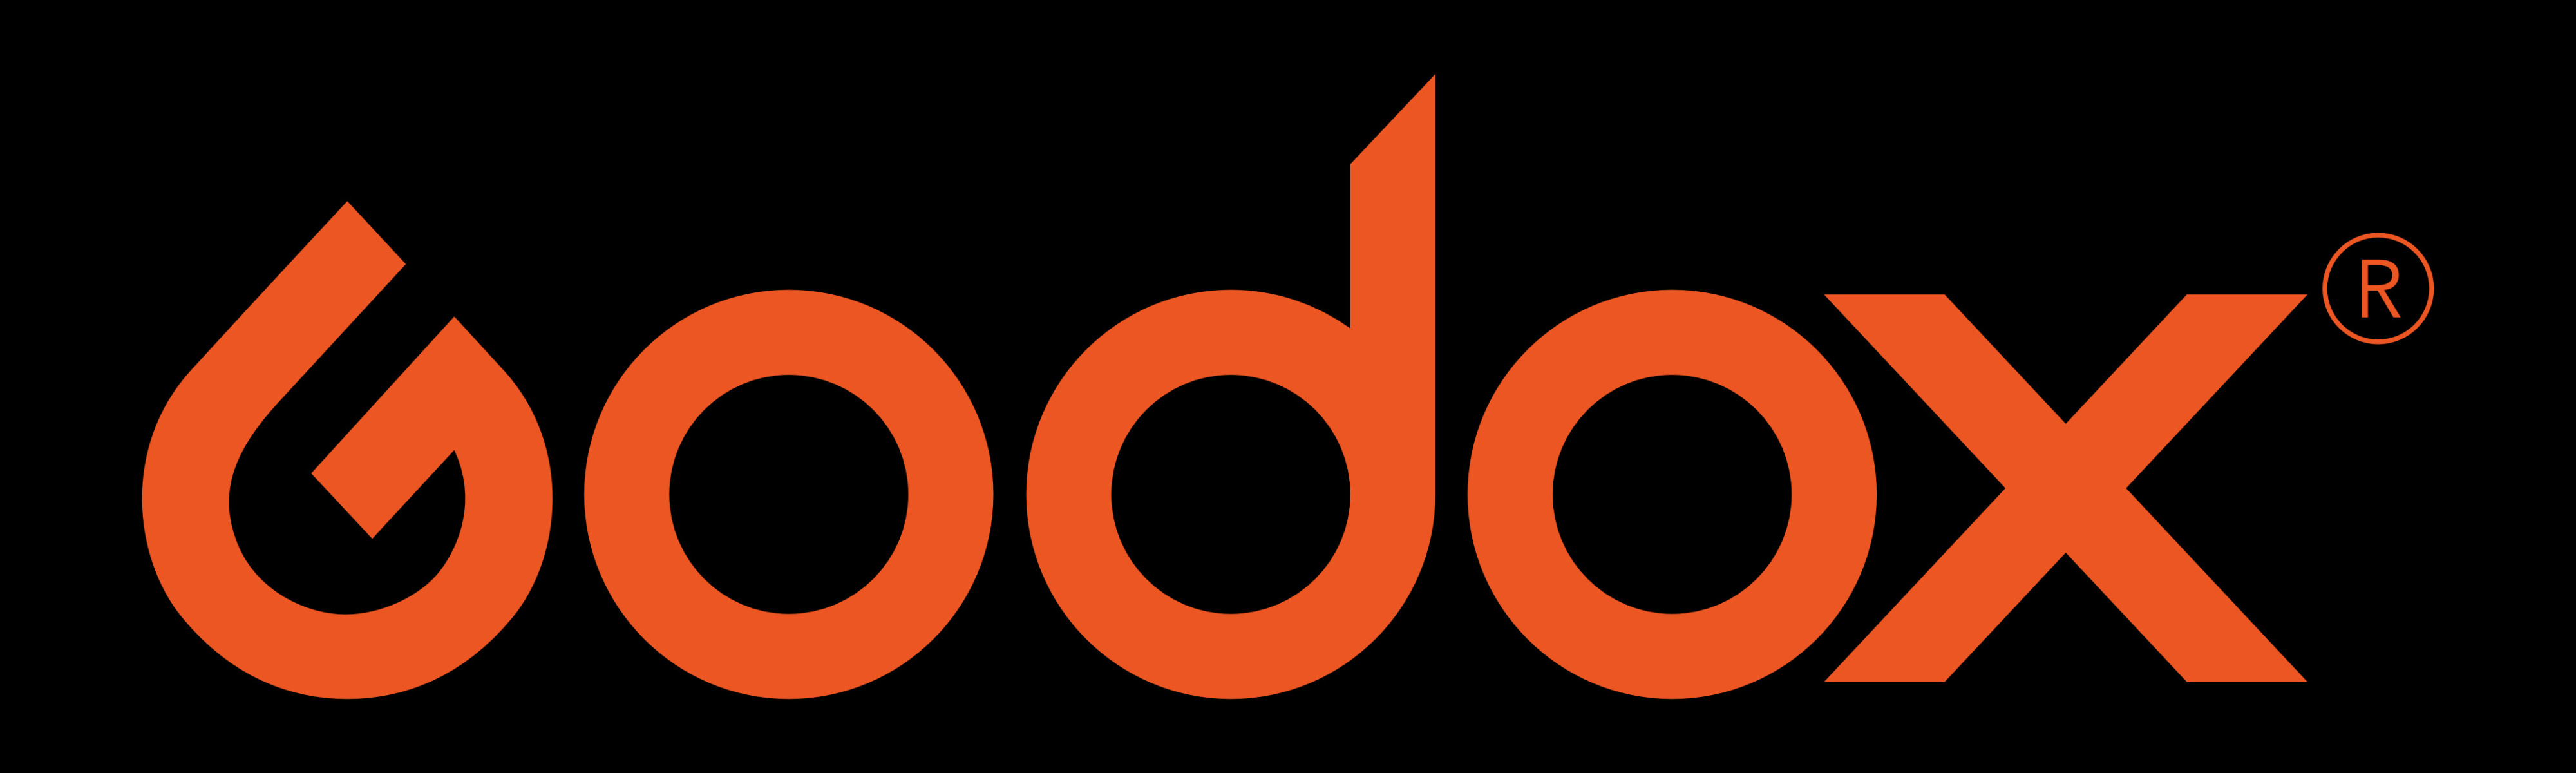 Godox-logo_news.jpg